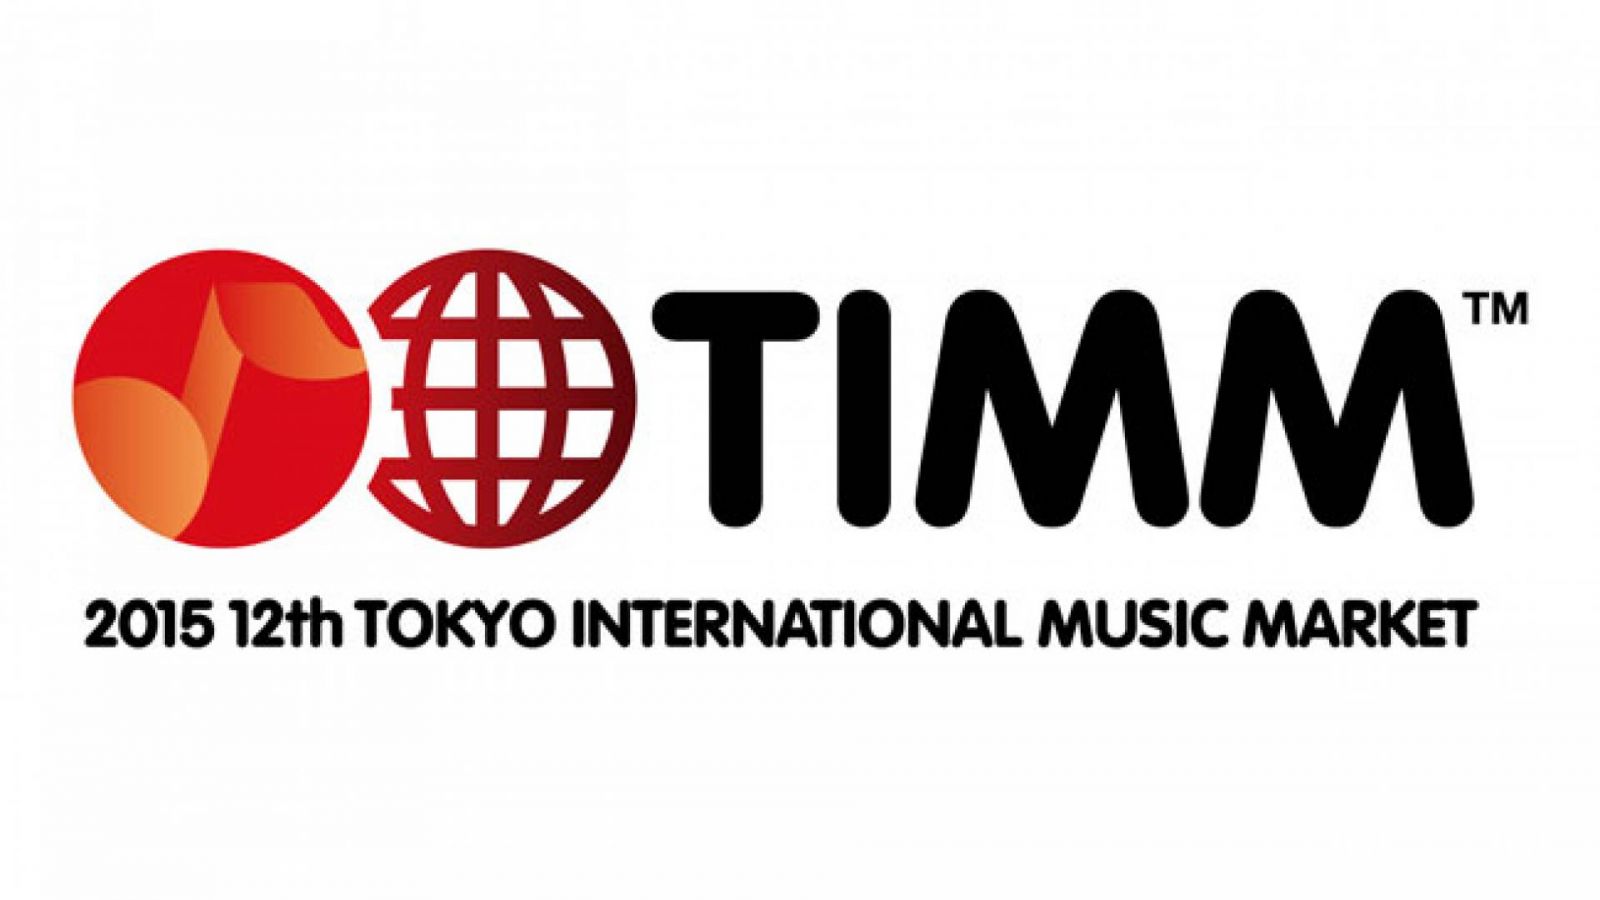 Detalles sobre el 12° Tokyo International Music Market © 12th Tokyo International Music Market